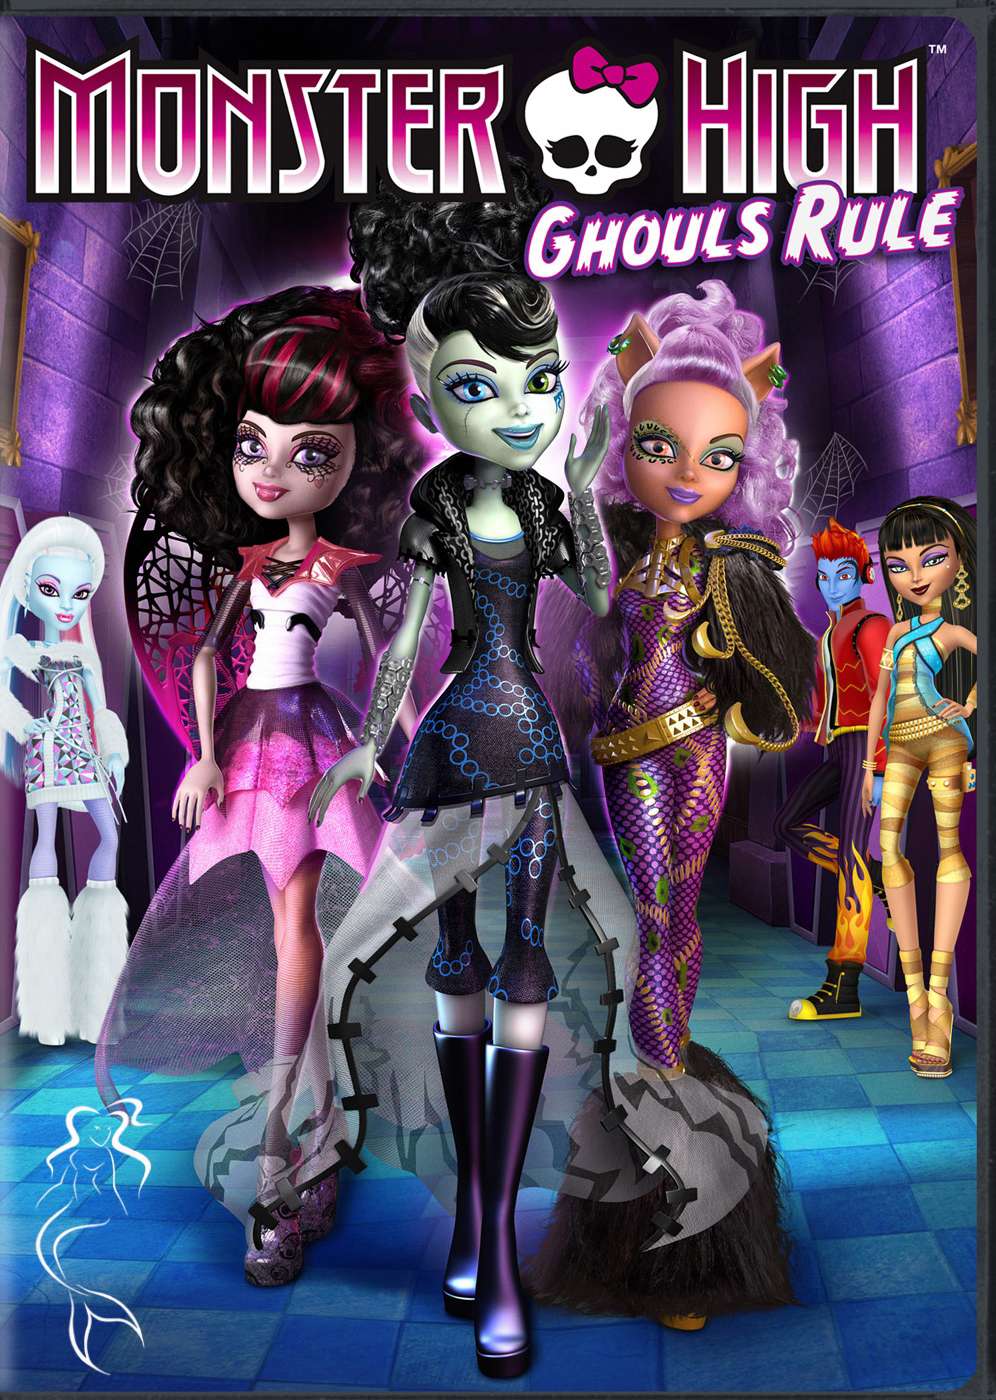 Monster High Ghouls Rule - 2012 BRRip XviD AC3 - Türkçe Altyazılı indir